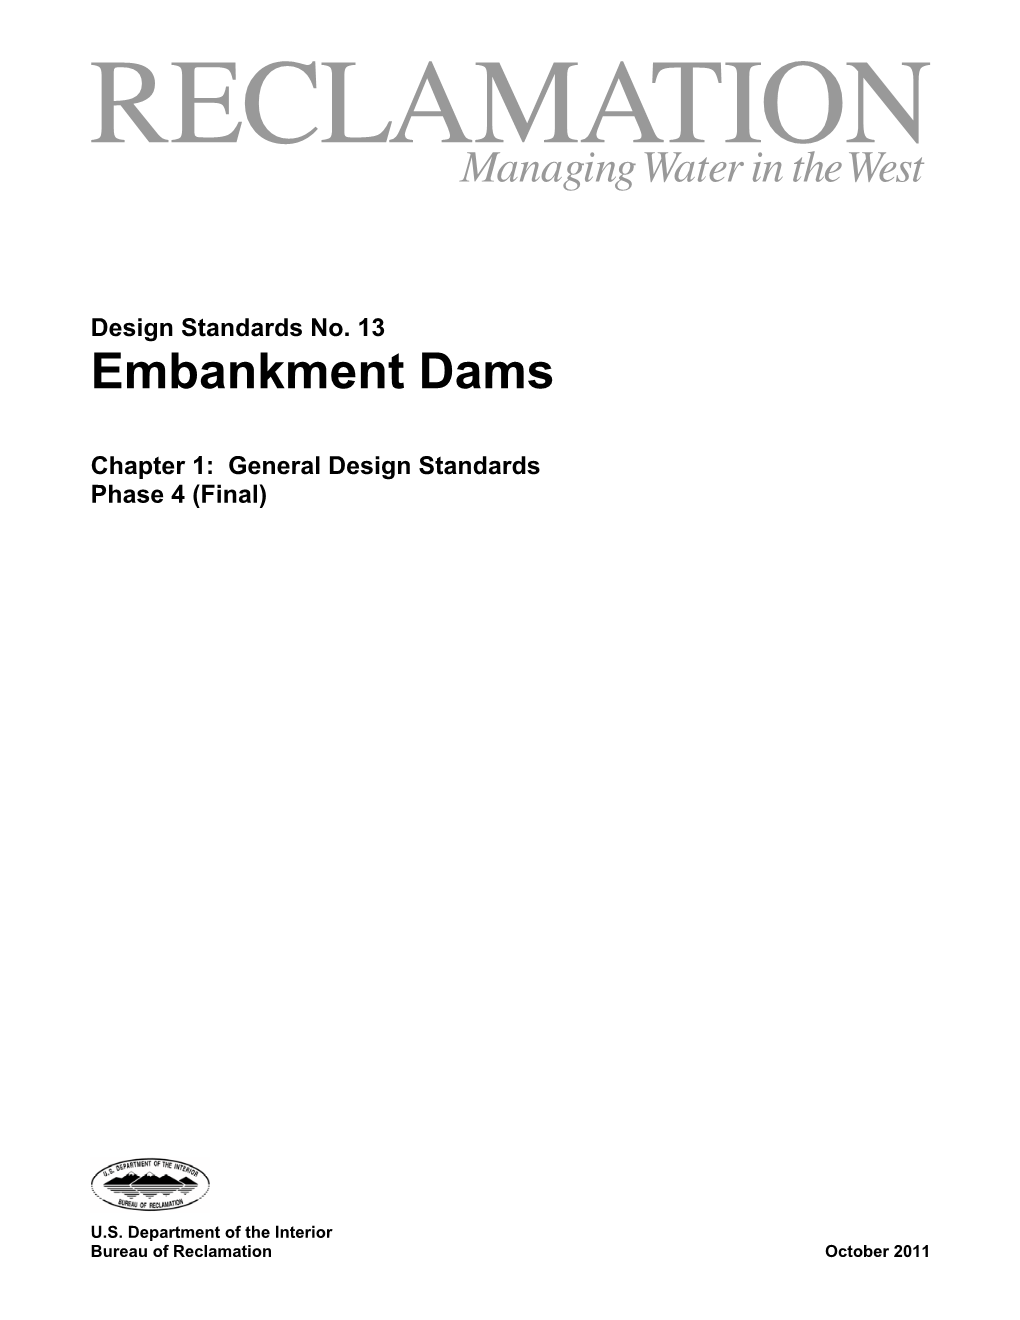 Design Standards No. 13: Embankment Dams